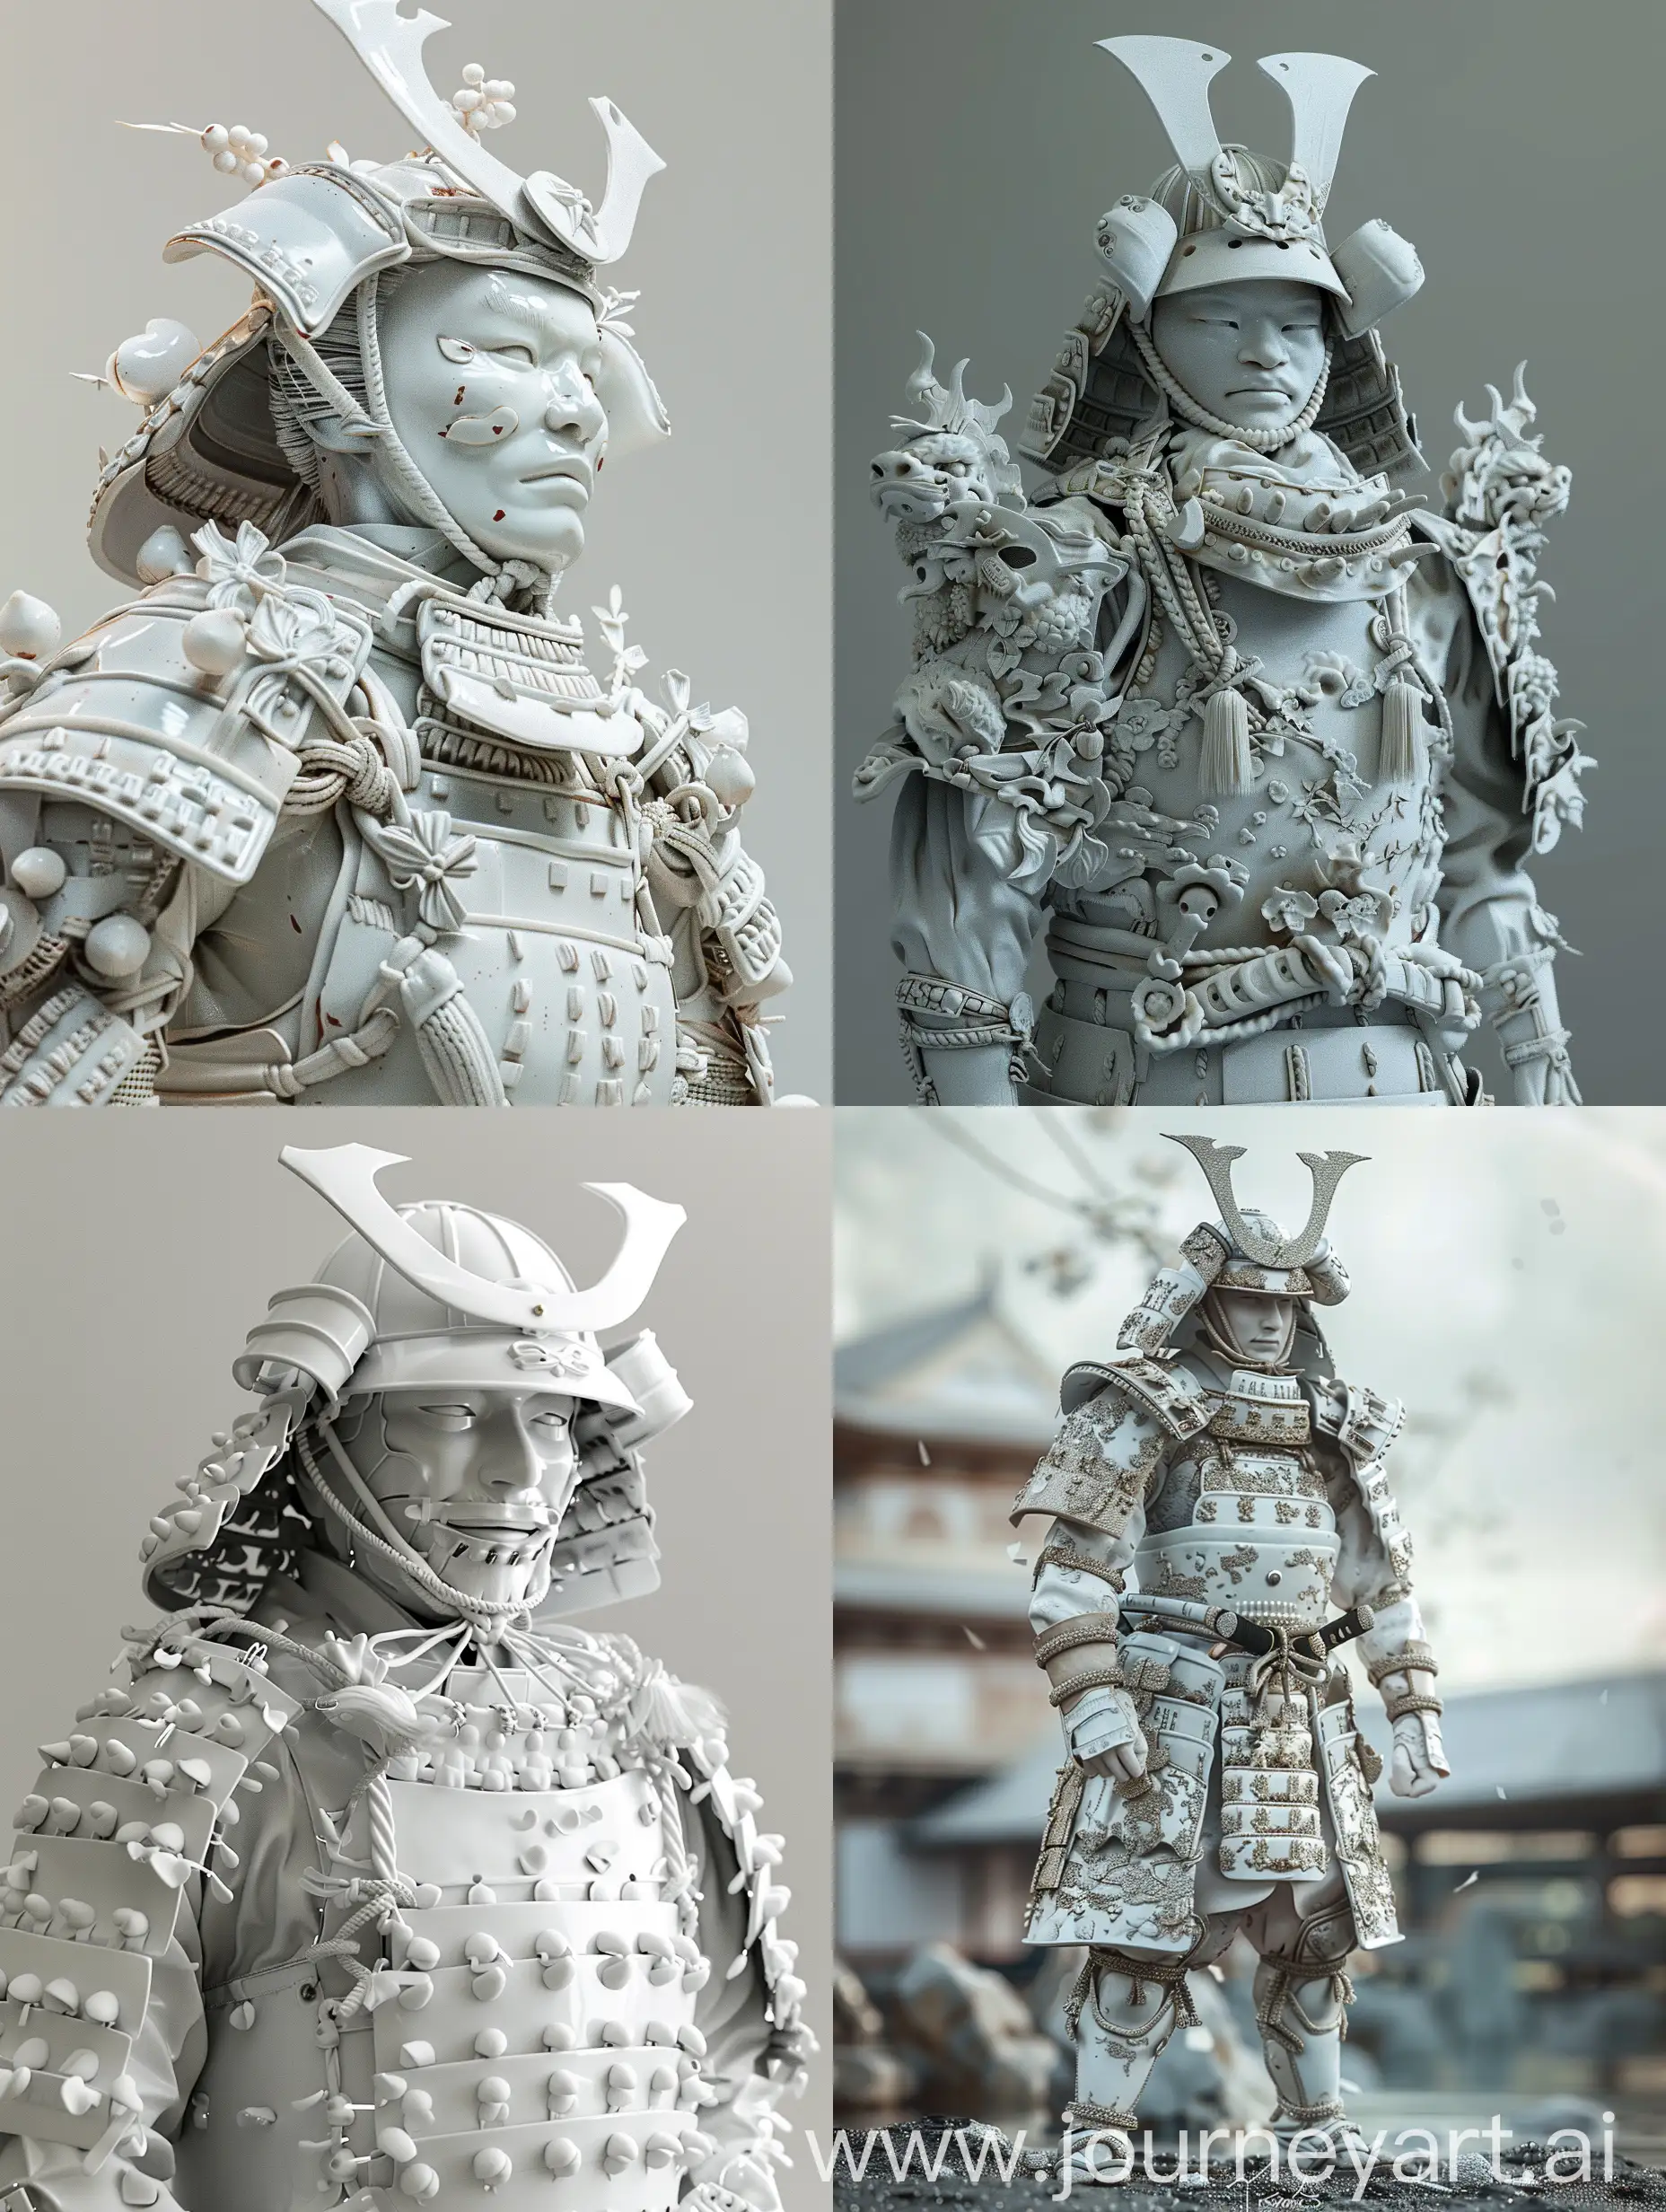 real samurai wearing armor made of porcelain, hyper realistic, 3d. v2